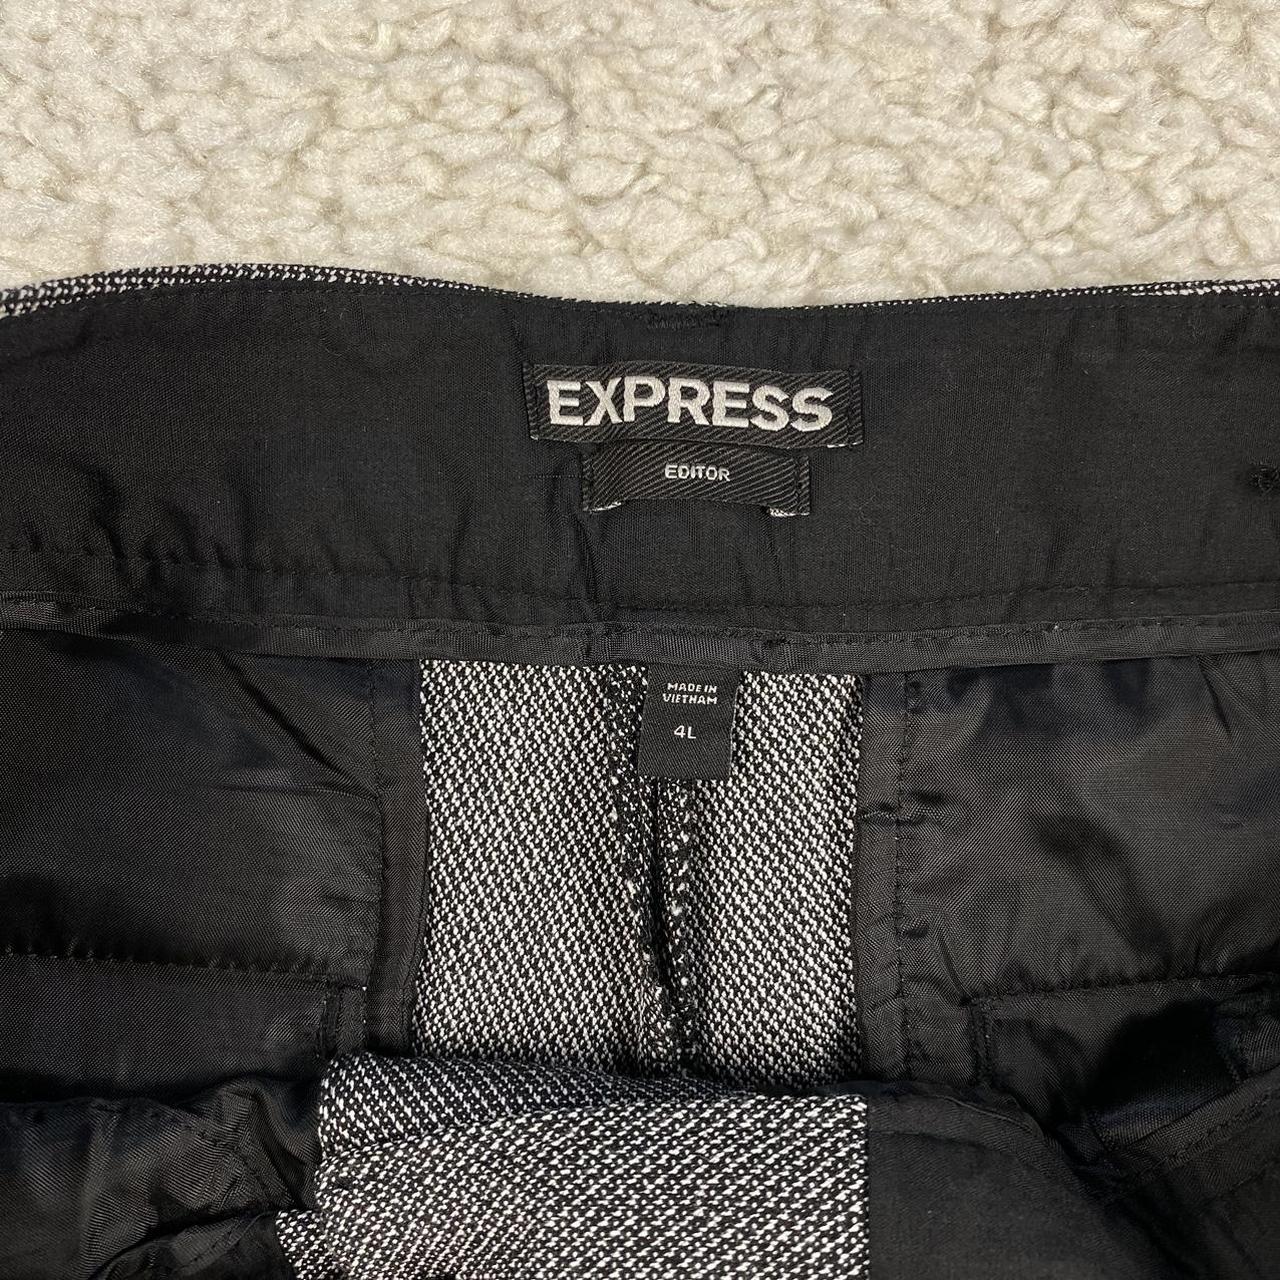 Express  ladies editor pants. Size: 4L.